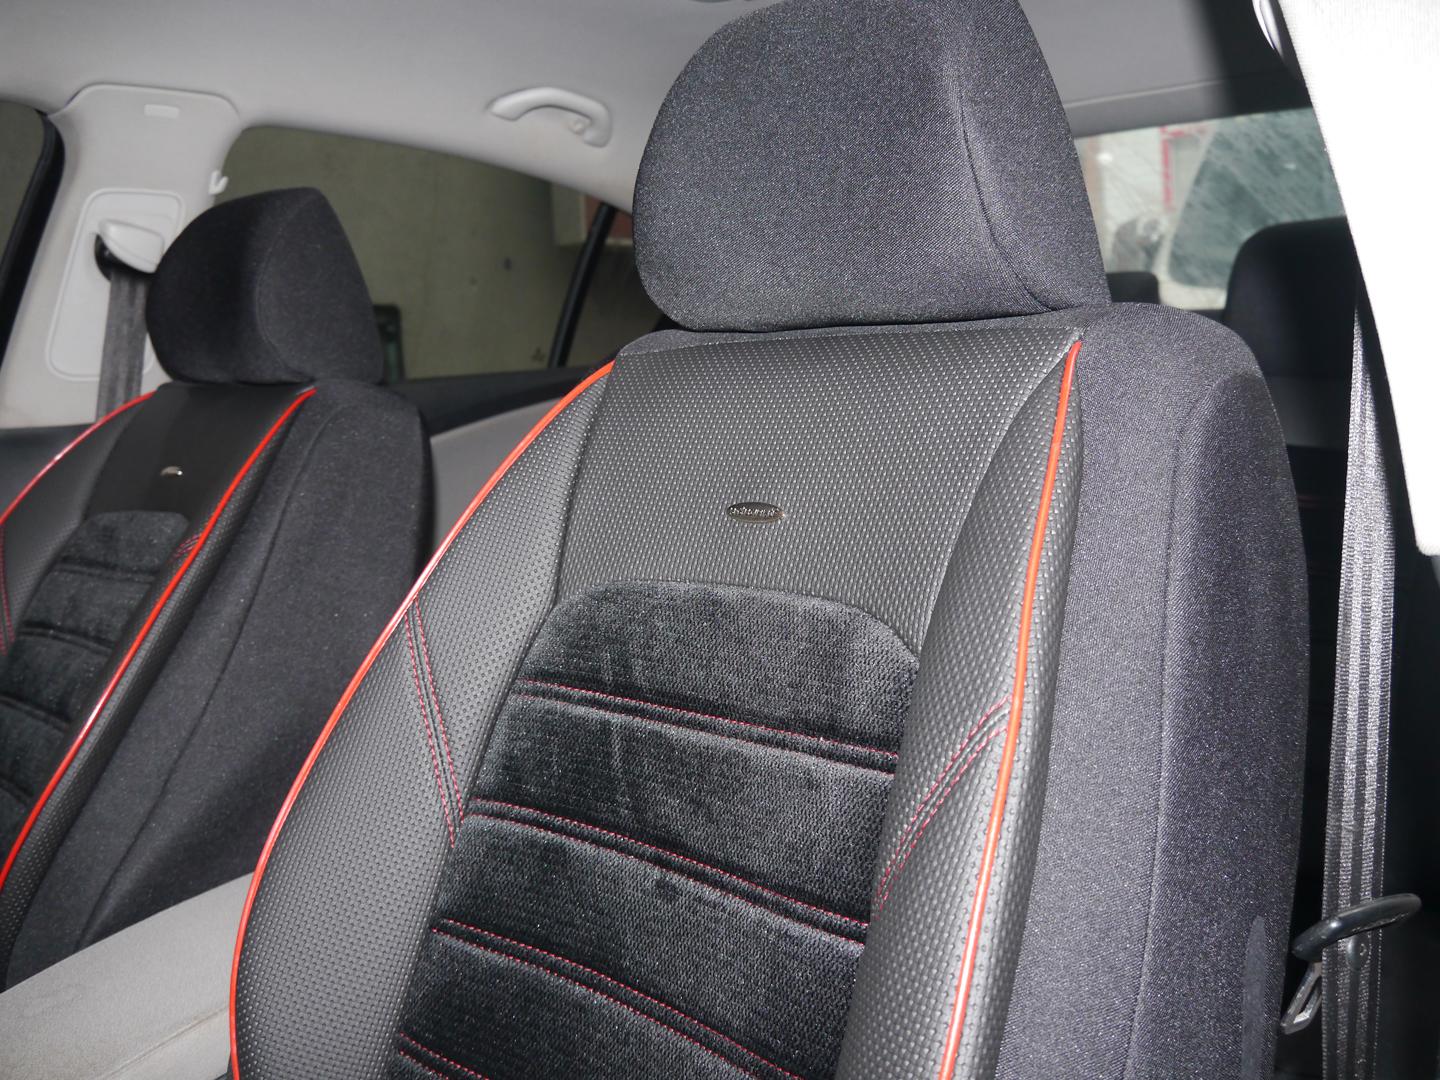 Yannaky Sitzbezügesets für V-W Golf 4 5 6 7 Mk4,Leder Schonbezüge sitzbezug  Sitzauflagen 5 Sitze Komplett-Set Airbag-kompatibel Autozubehör: :  Auto & Motorrad